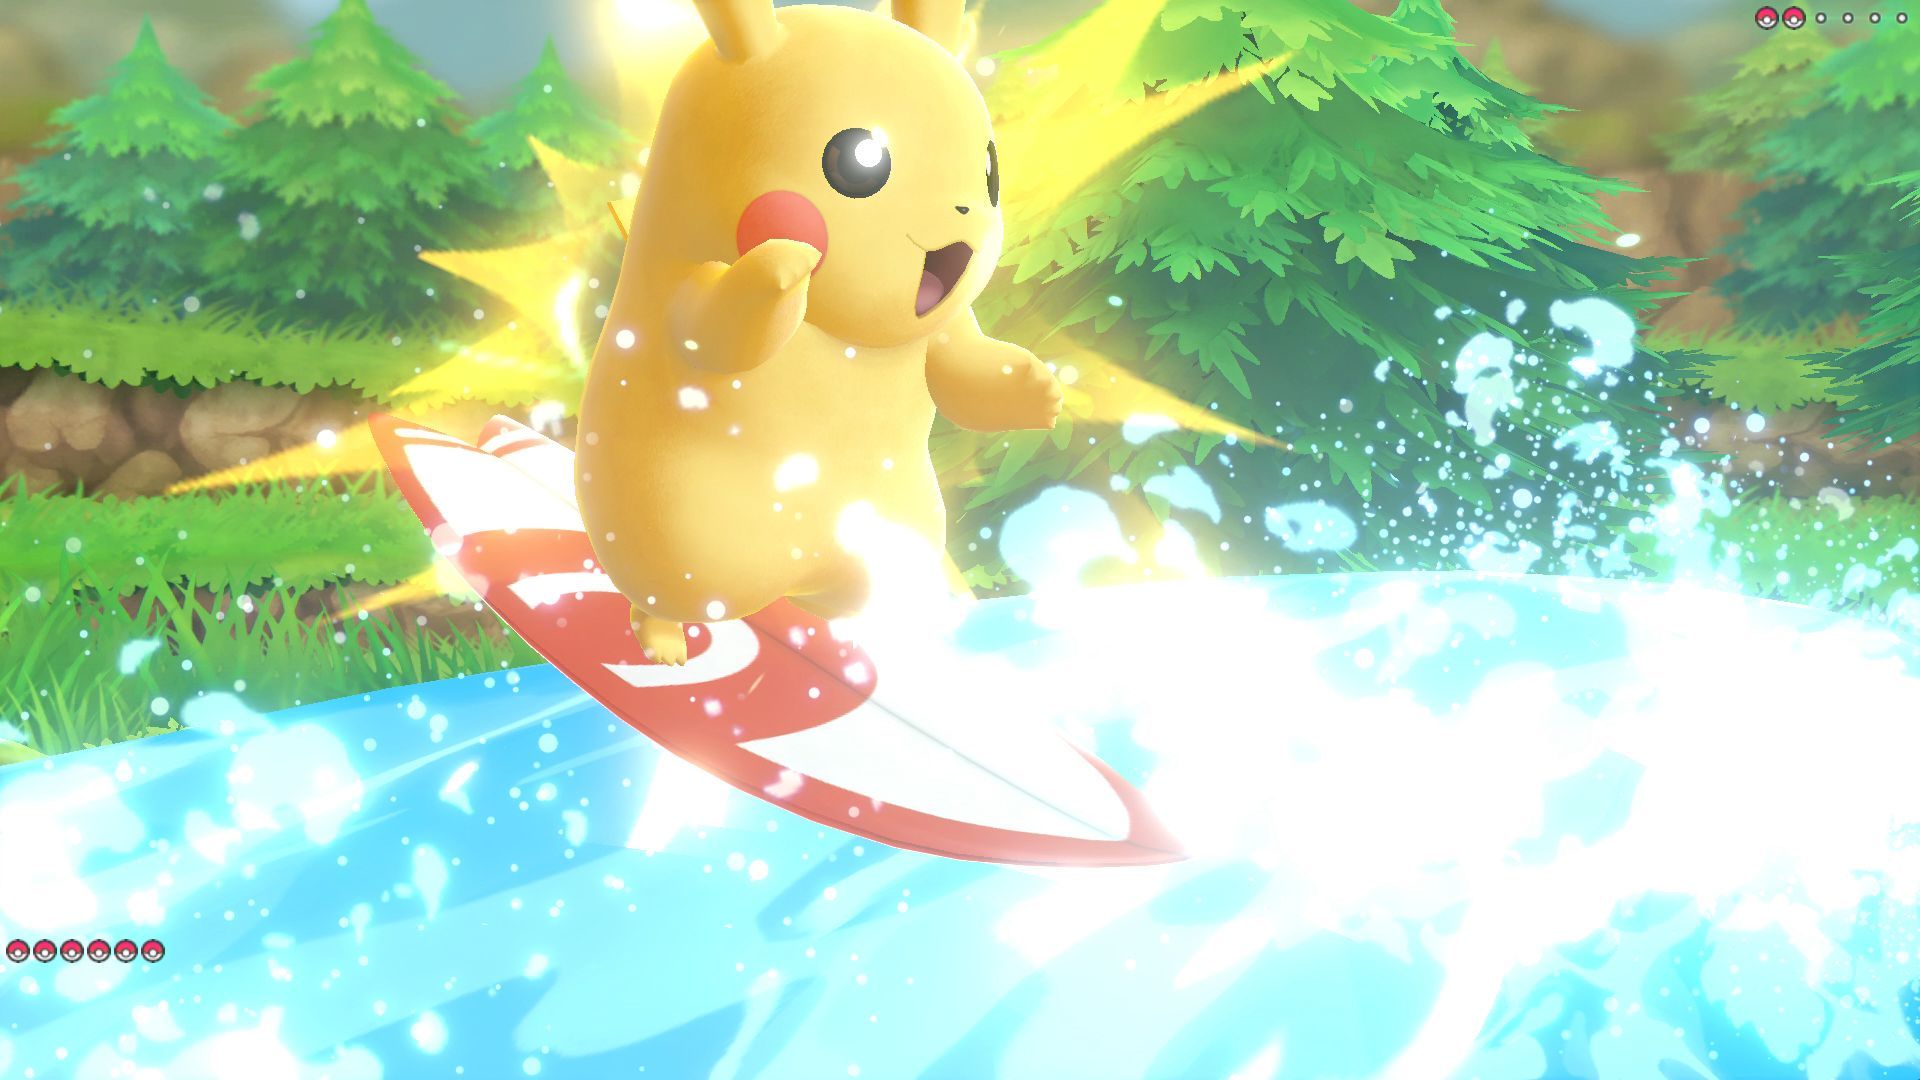 Pokémon Lets Go Pikachu And Eevee Trailer Reveals New